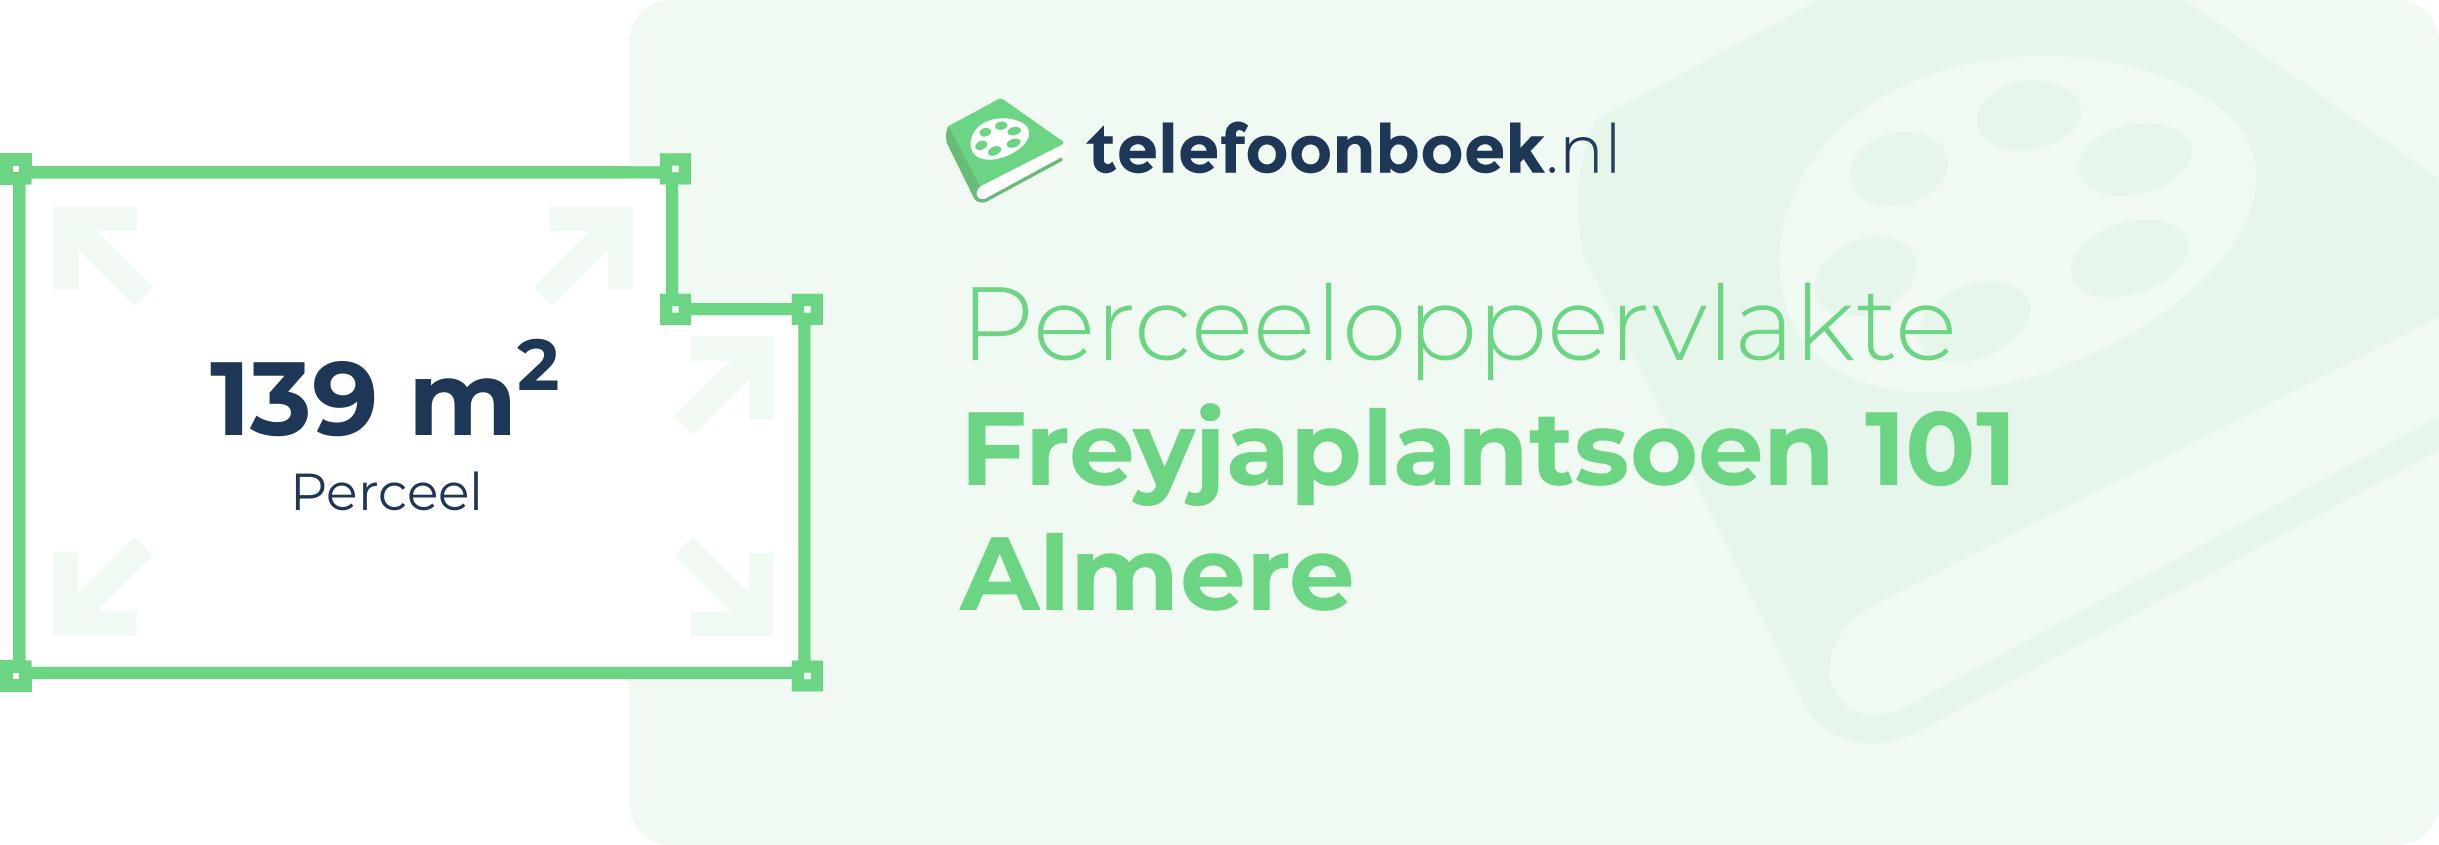 Perceeloppervlakte Freyjaplantsoen 101 Almere